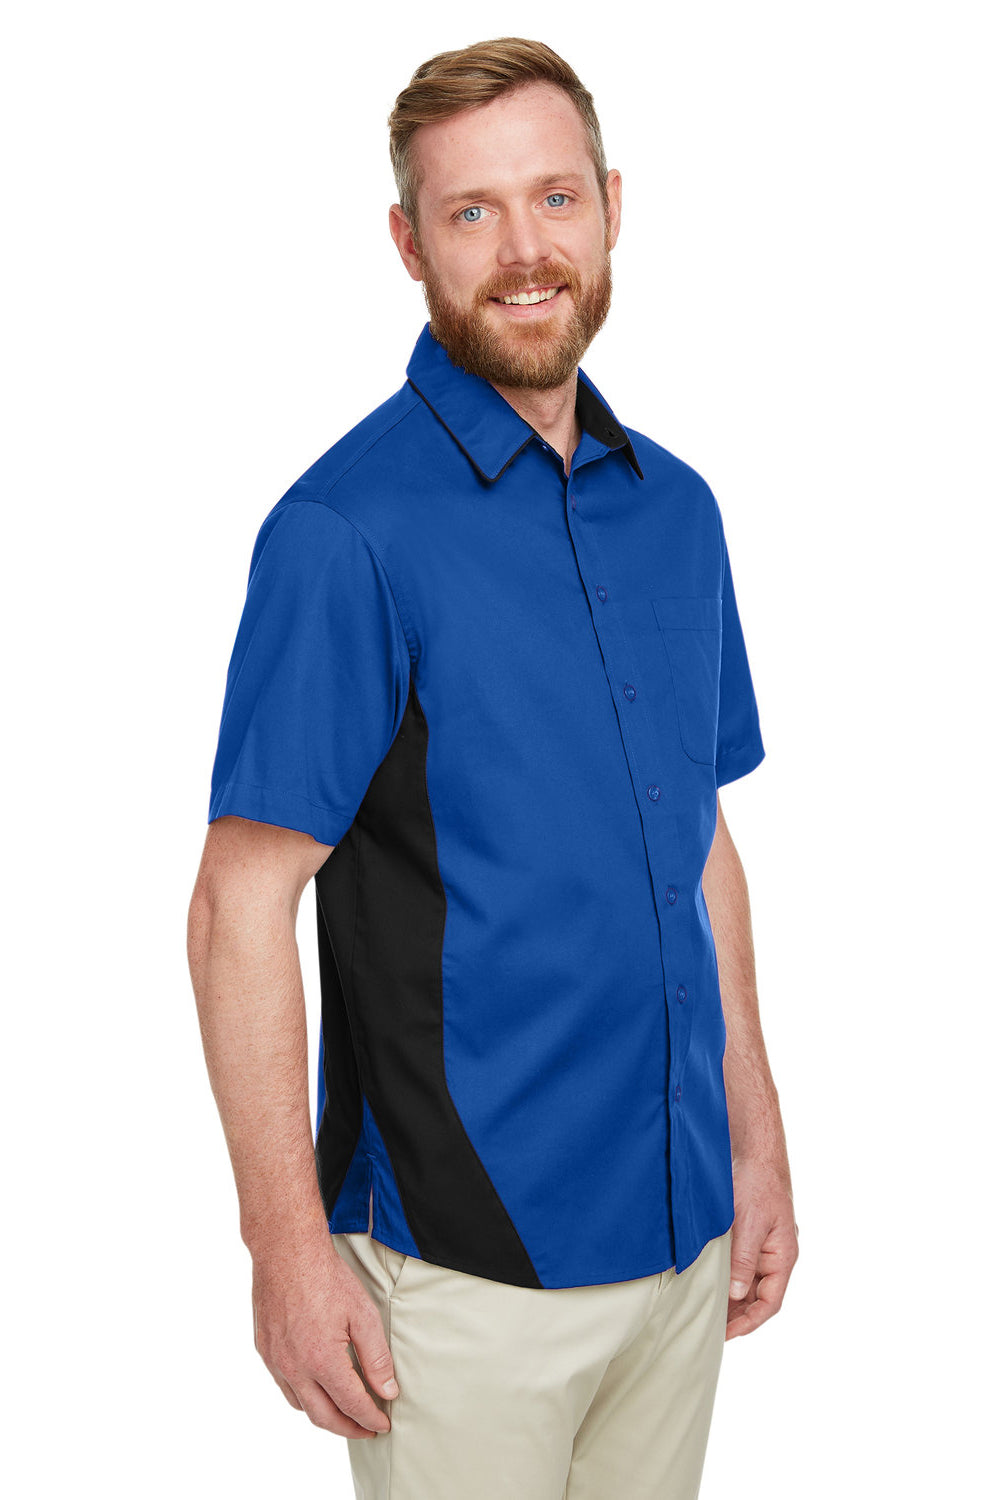 Harriton M586/M586T Mens Flash Colorblock Short Sleeve Button Down Shirt w/ Pocket True Royal Blue/Black 3Q